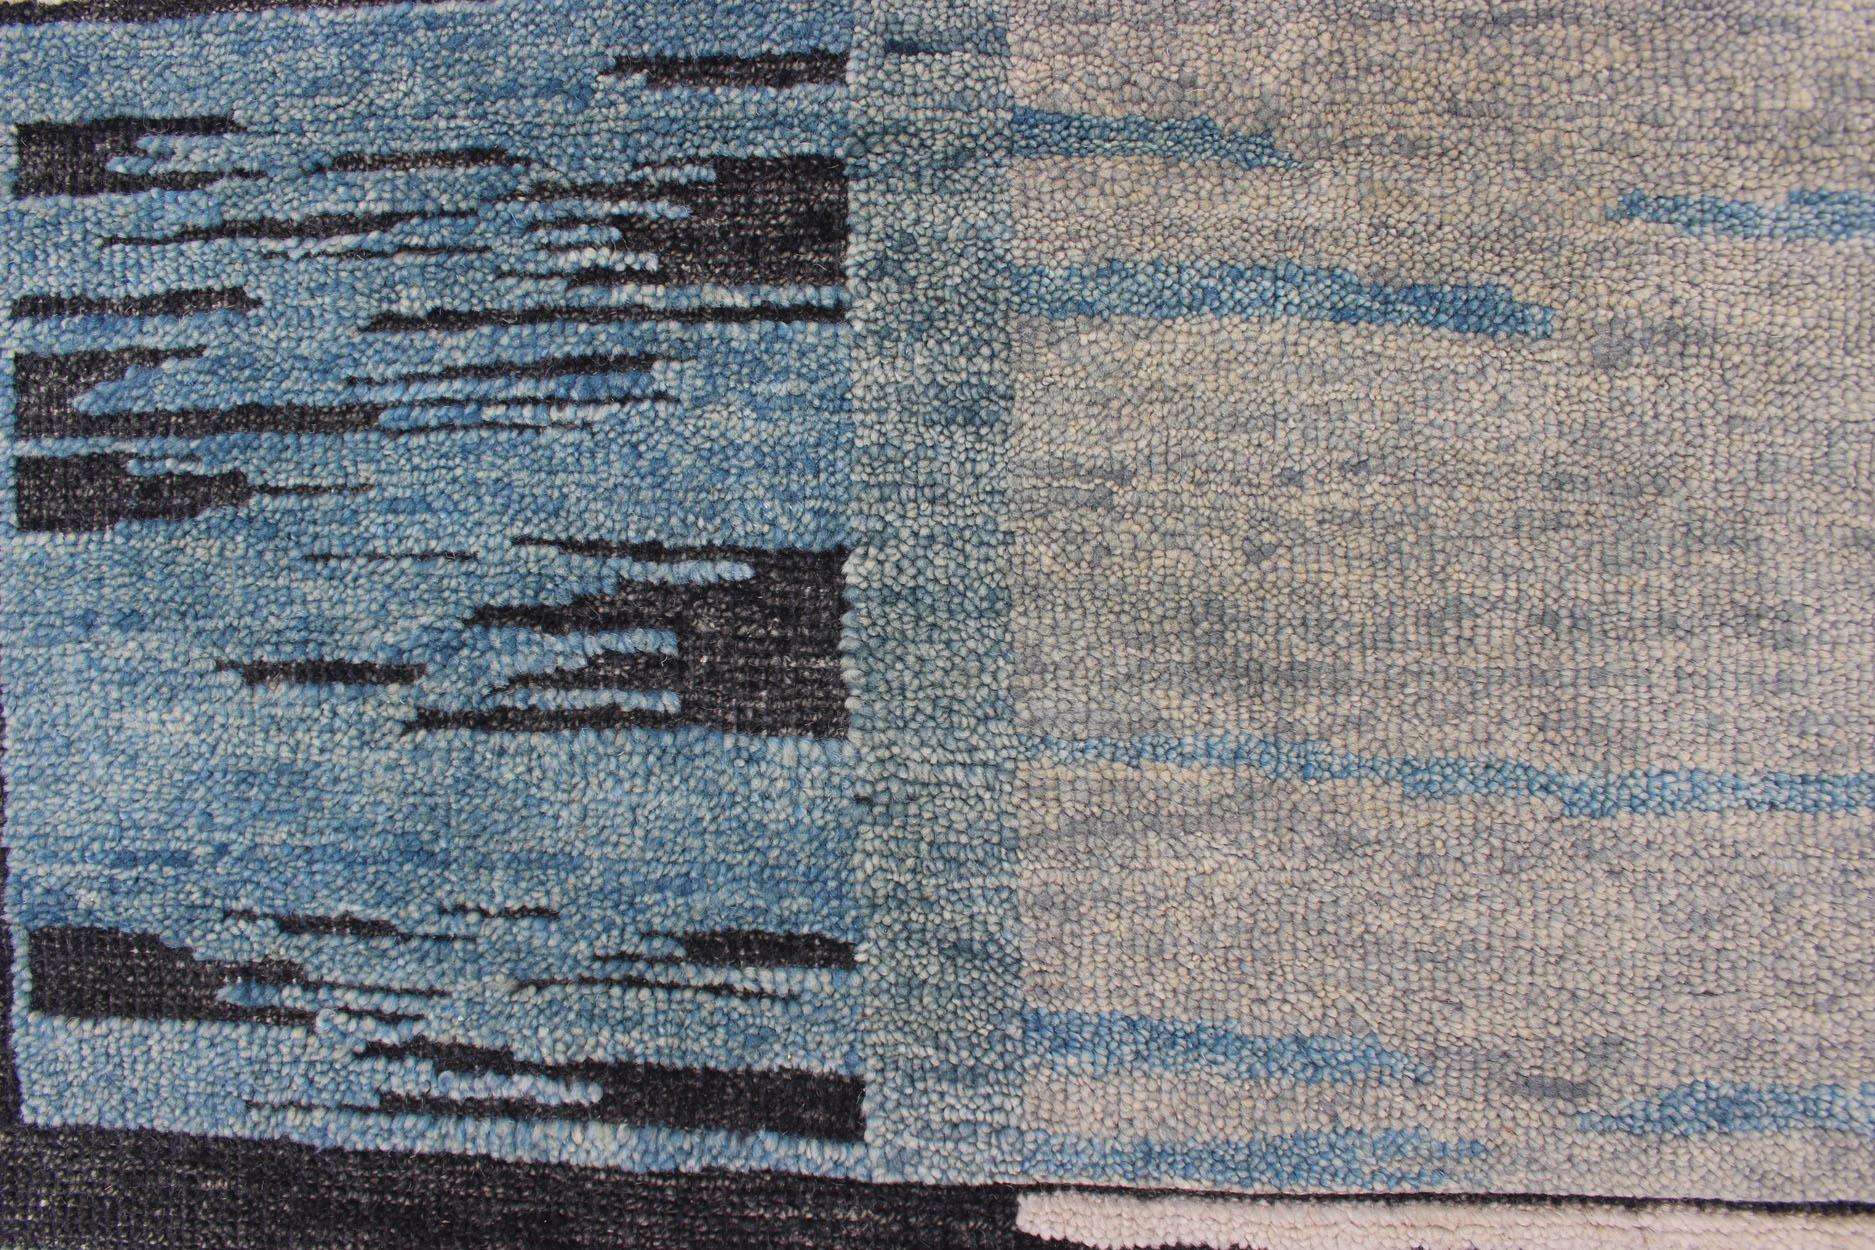 Piled Modern Scandinavian/Swedish Design Rug in Blue Tones, White, Taupe & Cream For Sale 3